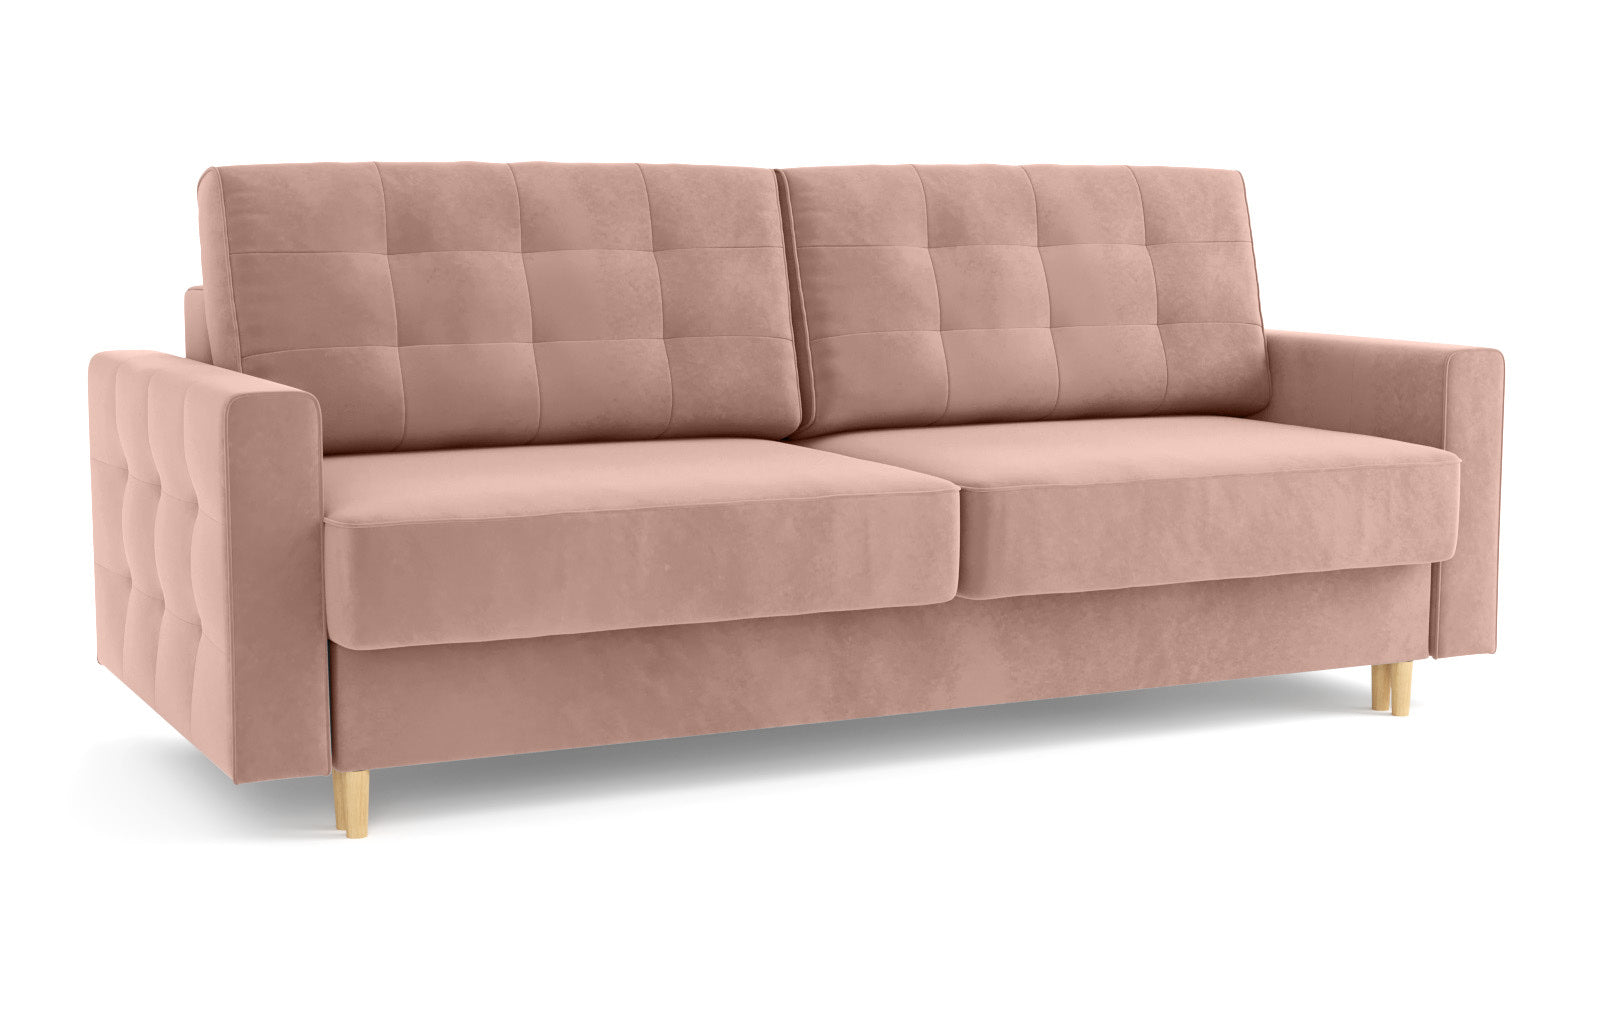 Amani Sofa Bed